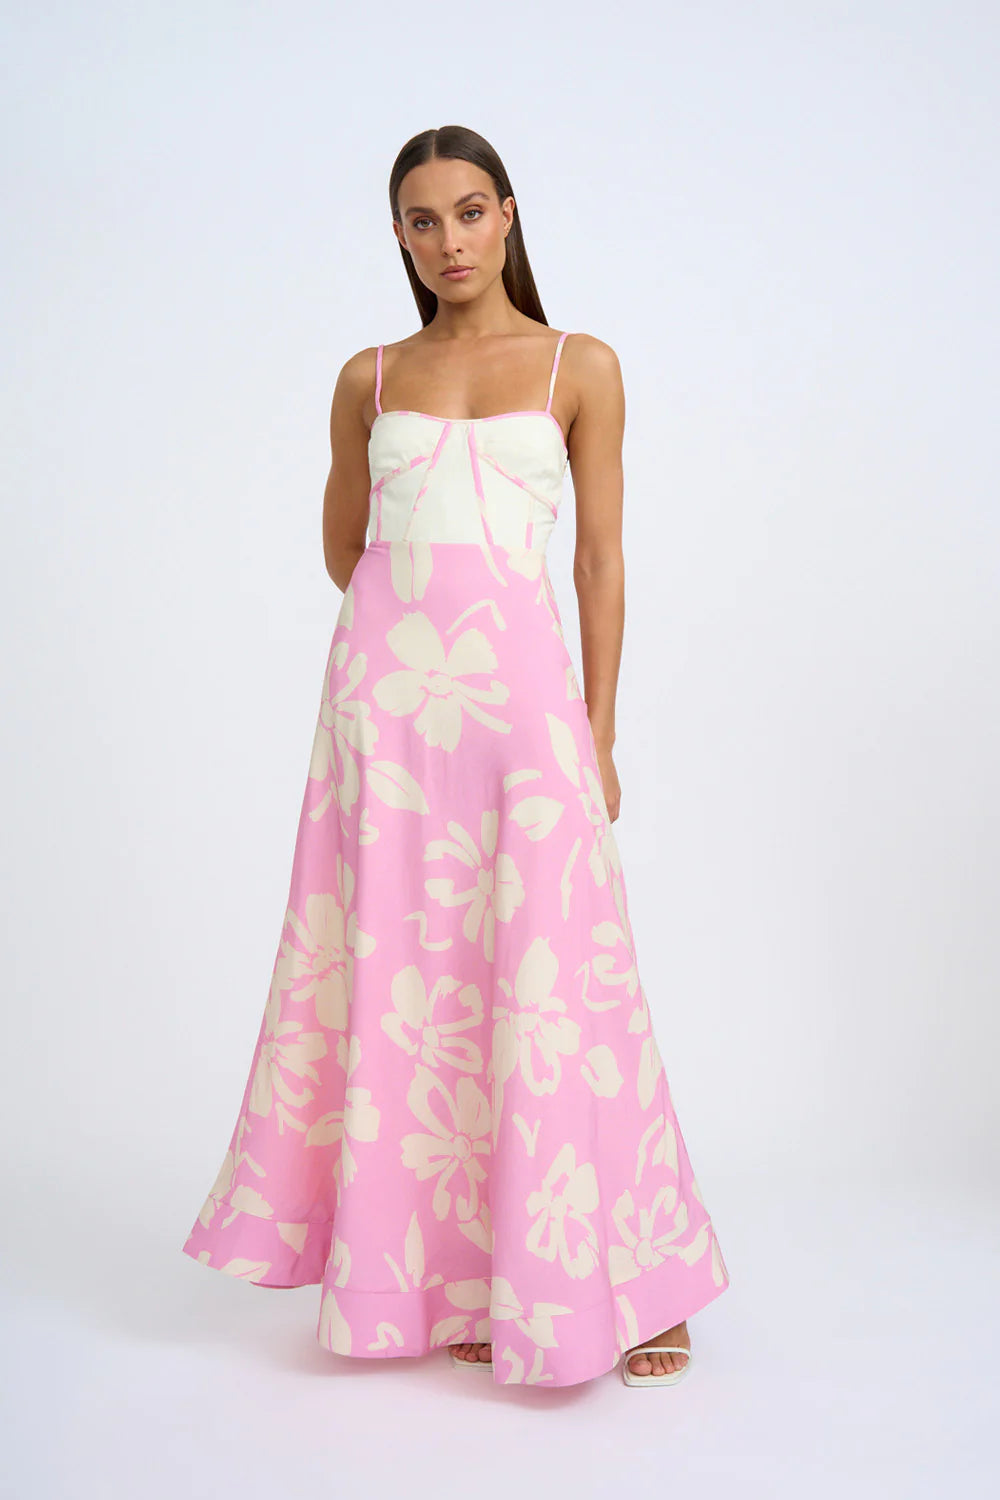 Fia Linen Floral Dress Pink